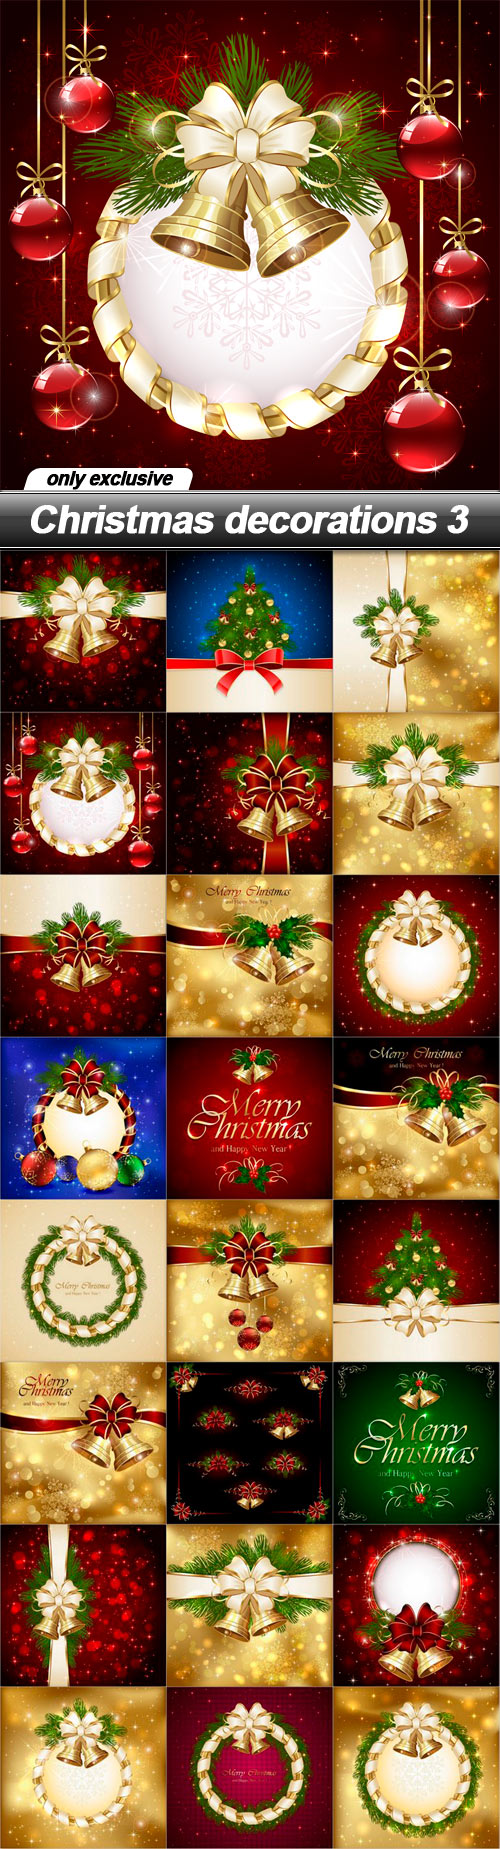 Christmas decorations 3 - 25 EPS